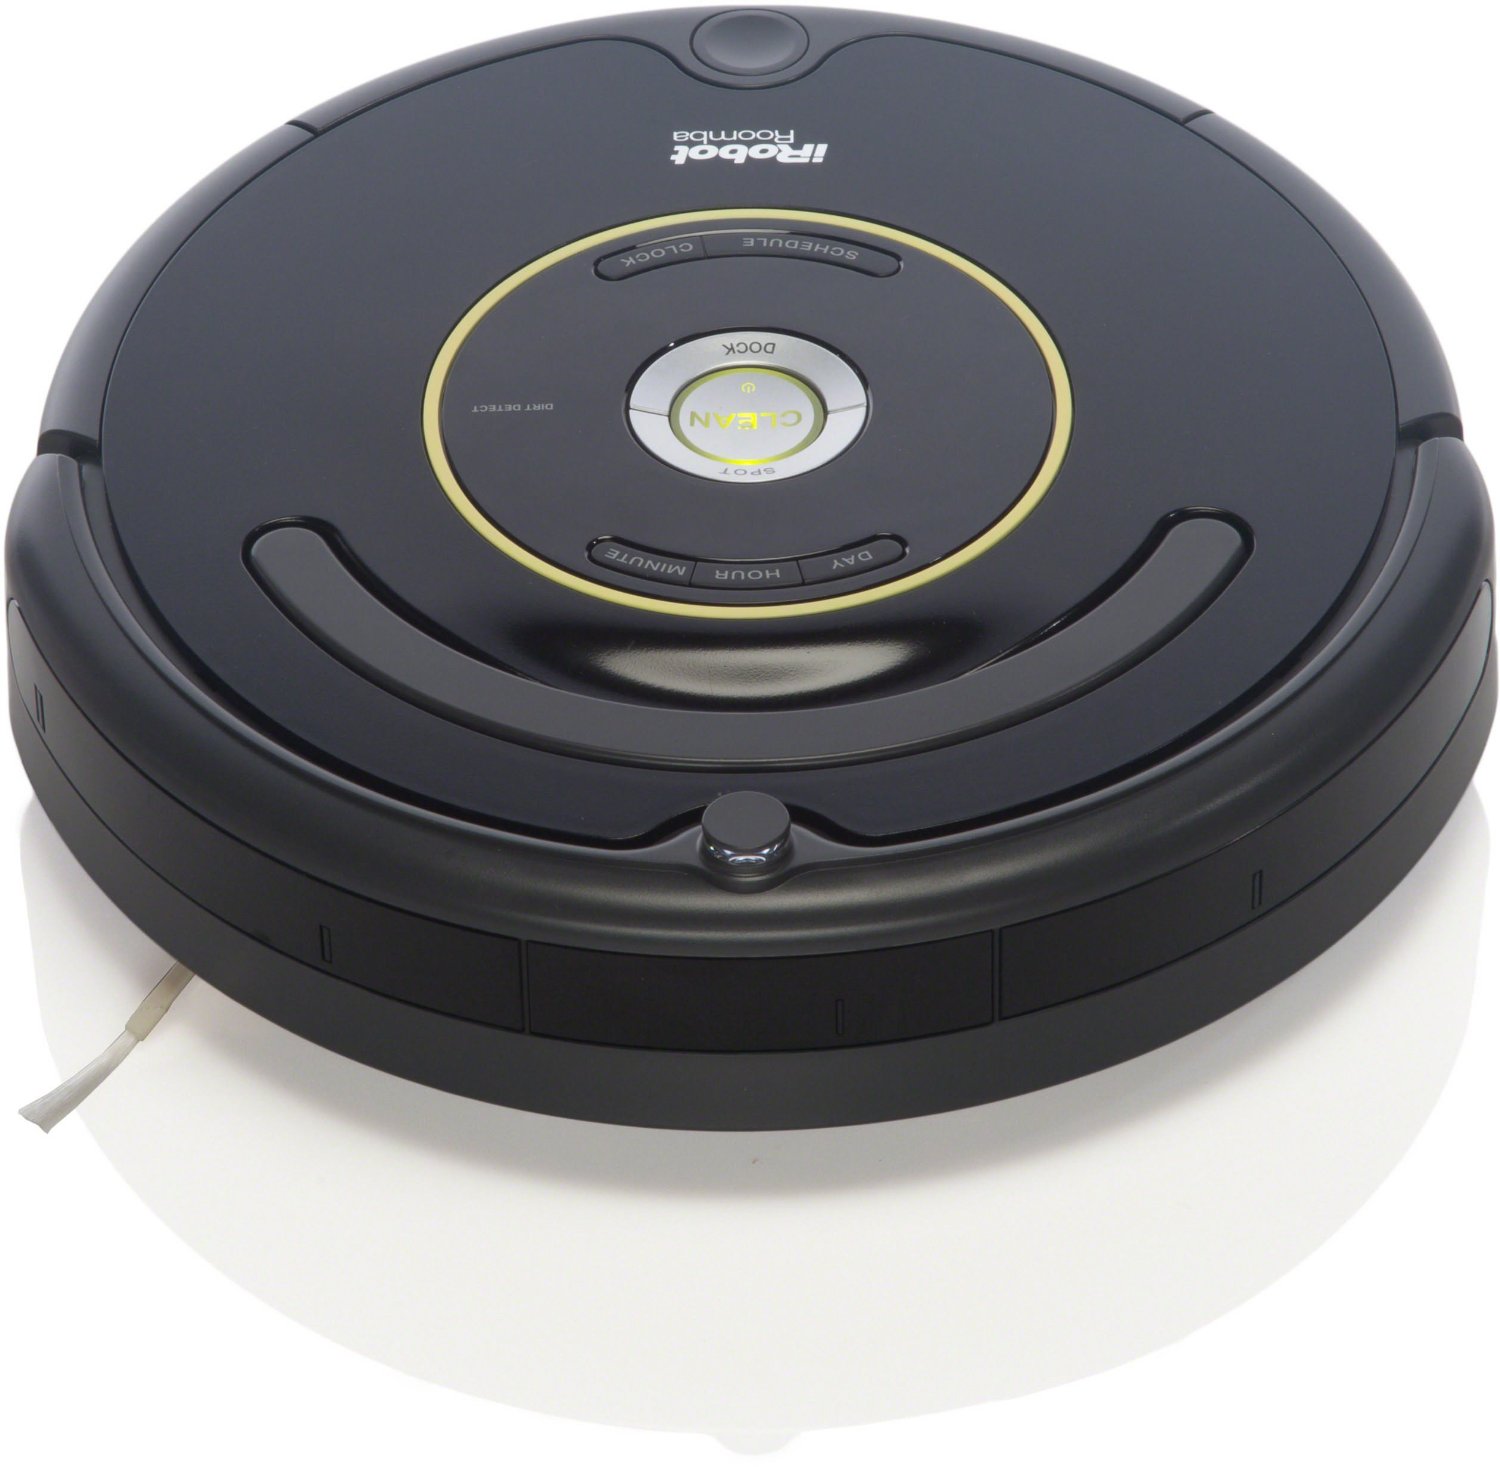 Aspirateur robot iRobot Roomba 650 : notre avis détaillé